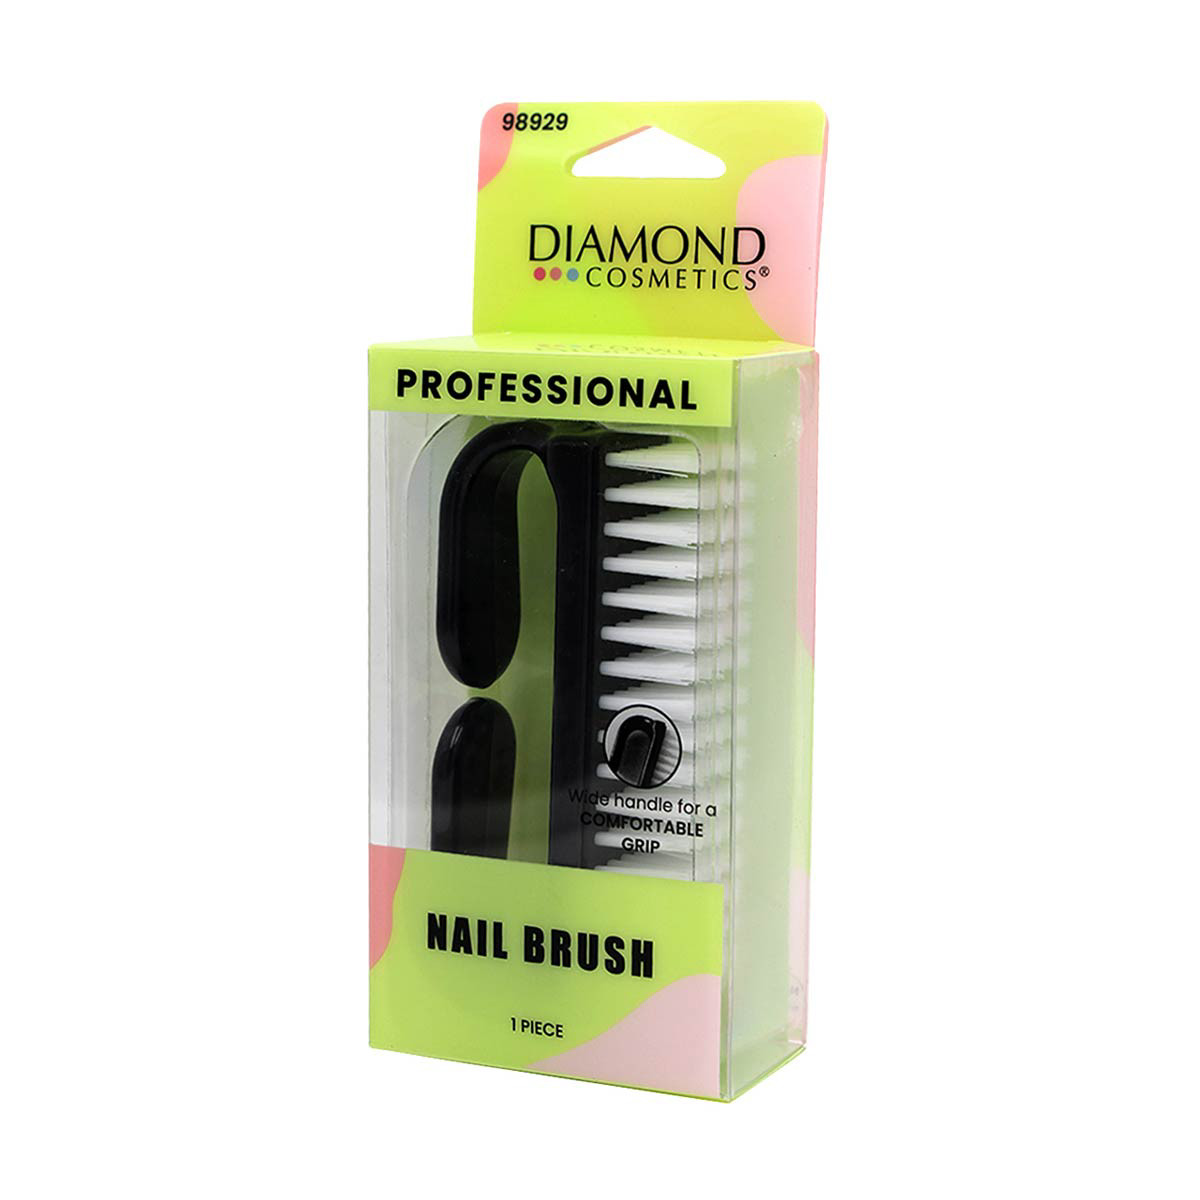 Diamond Cosmetics Professional Nail Brush